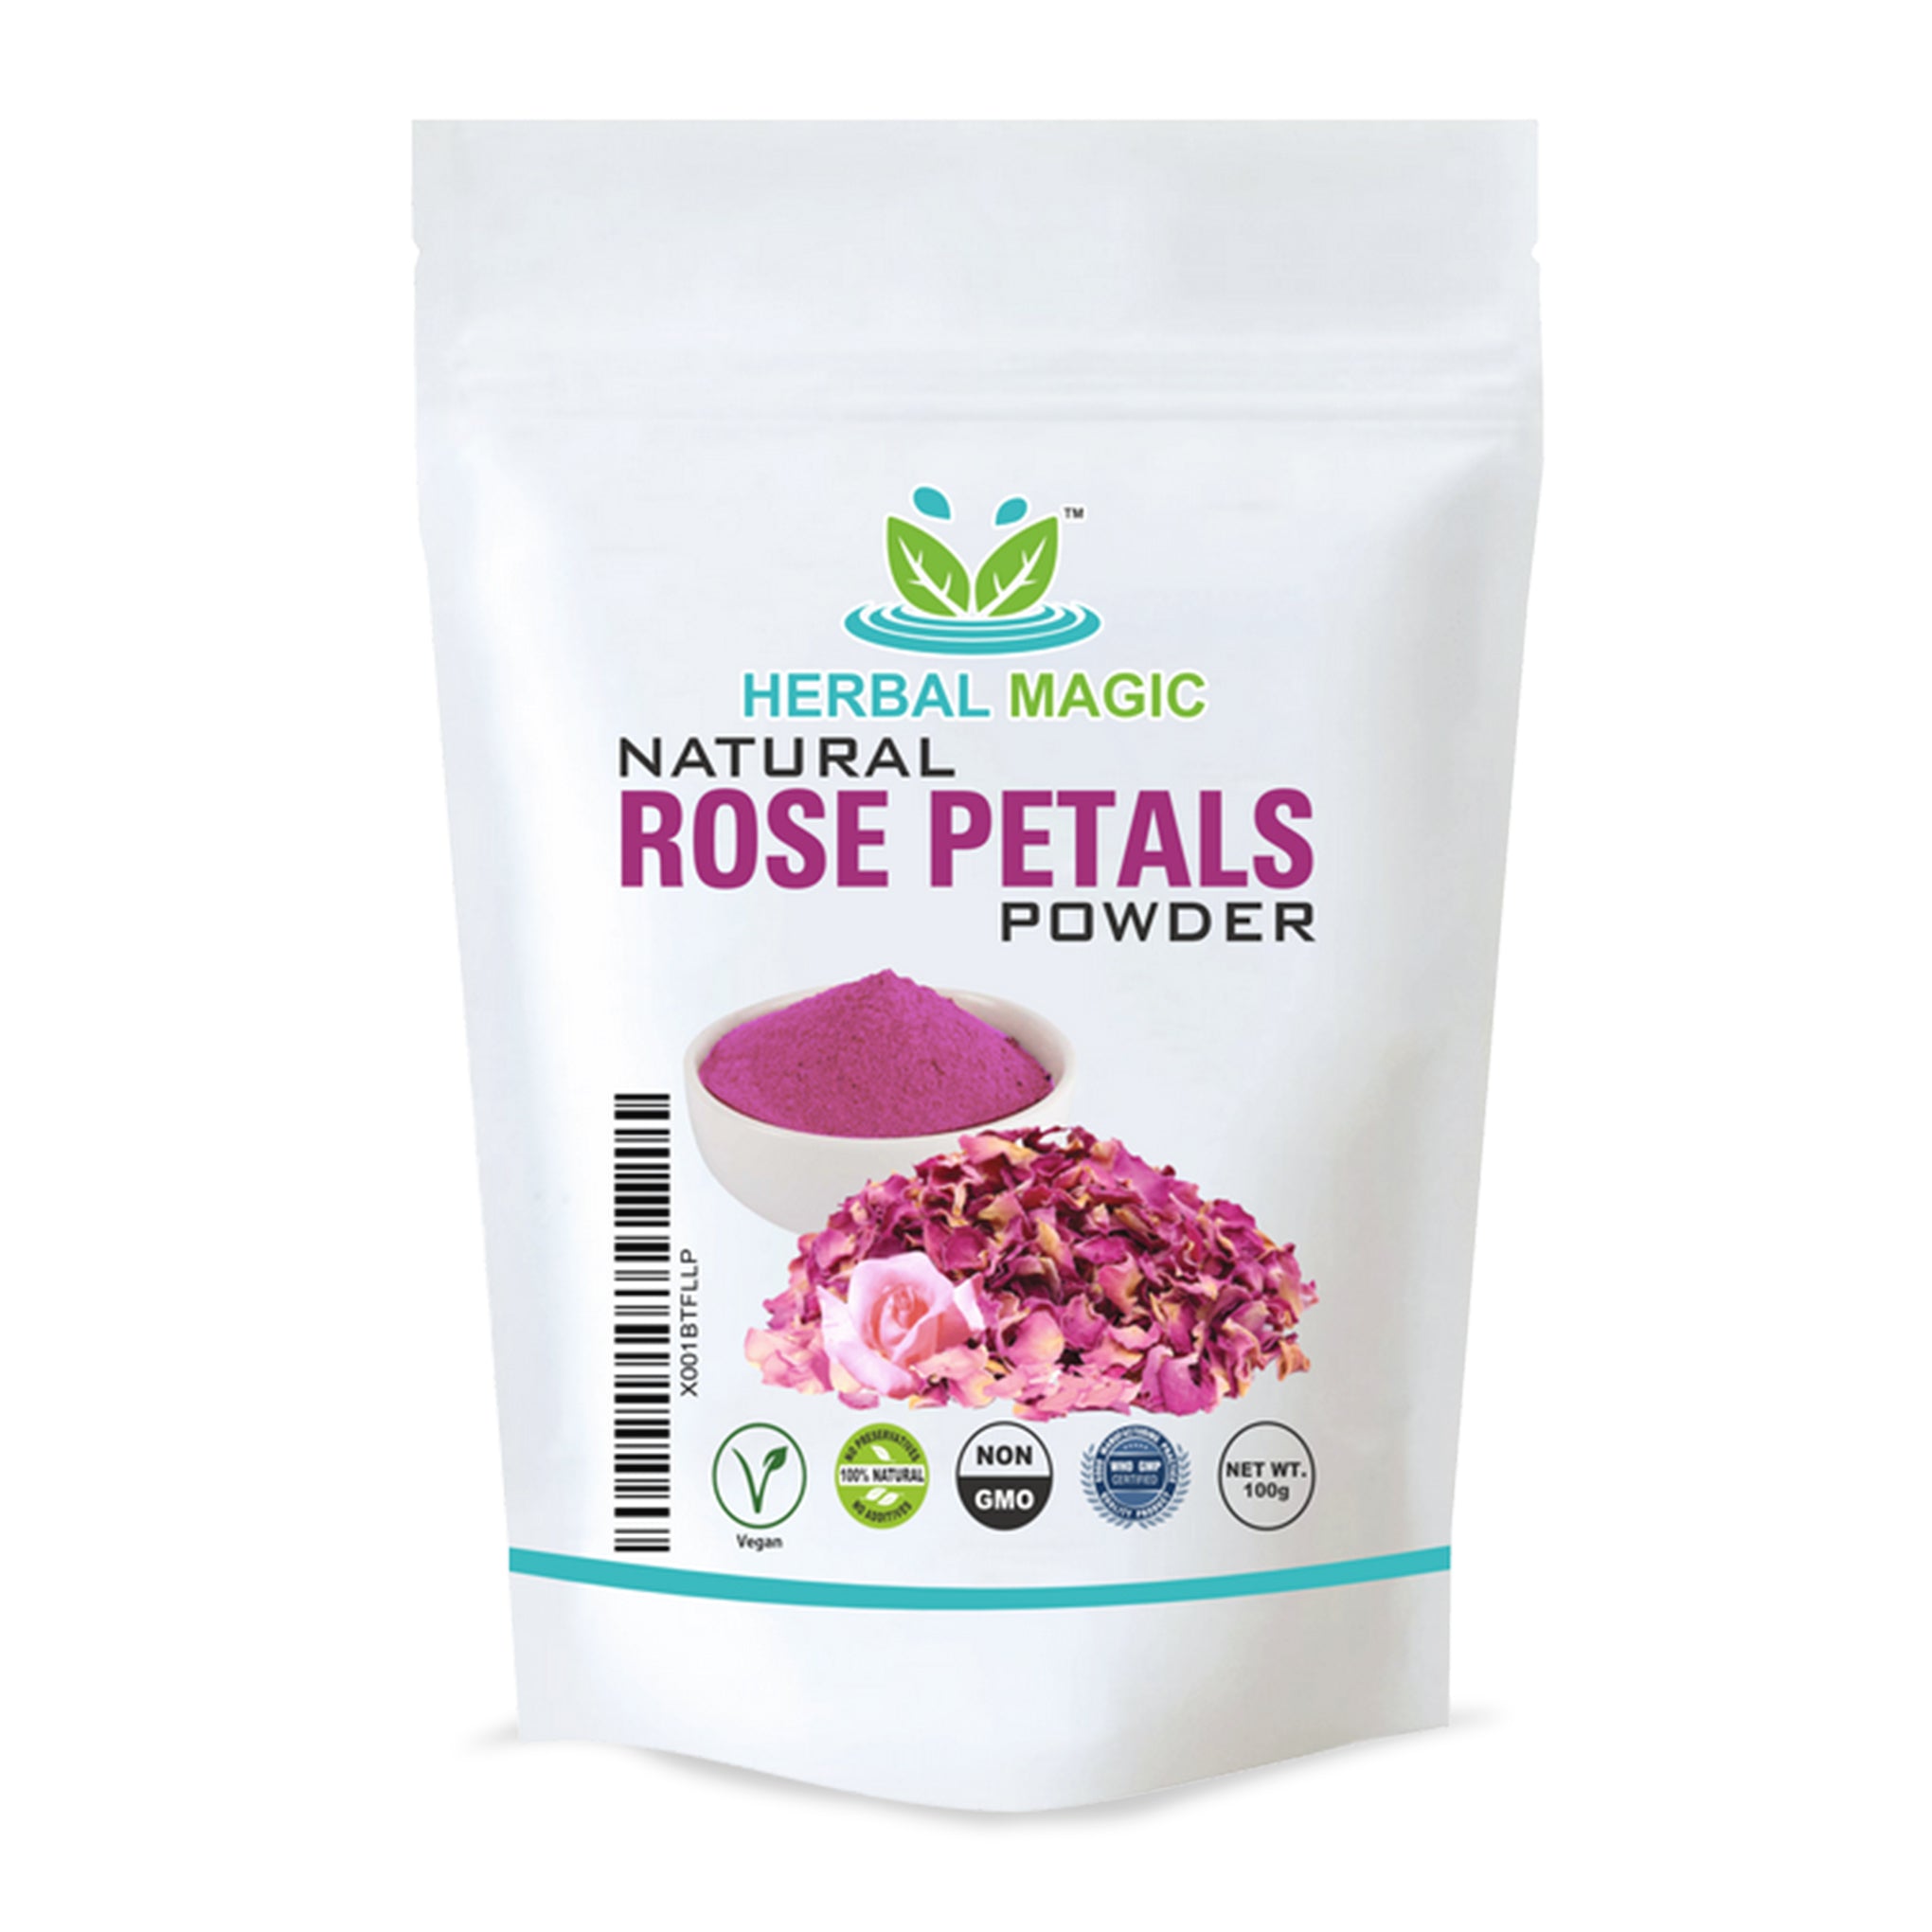 Rose Petal Powder, Organic